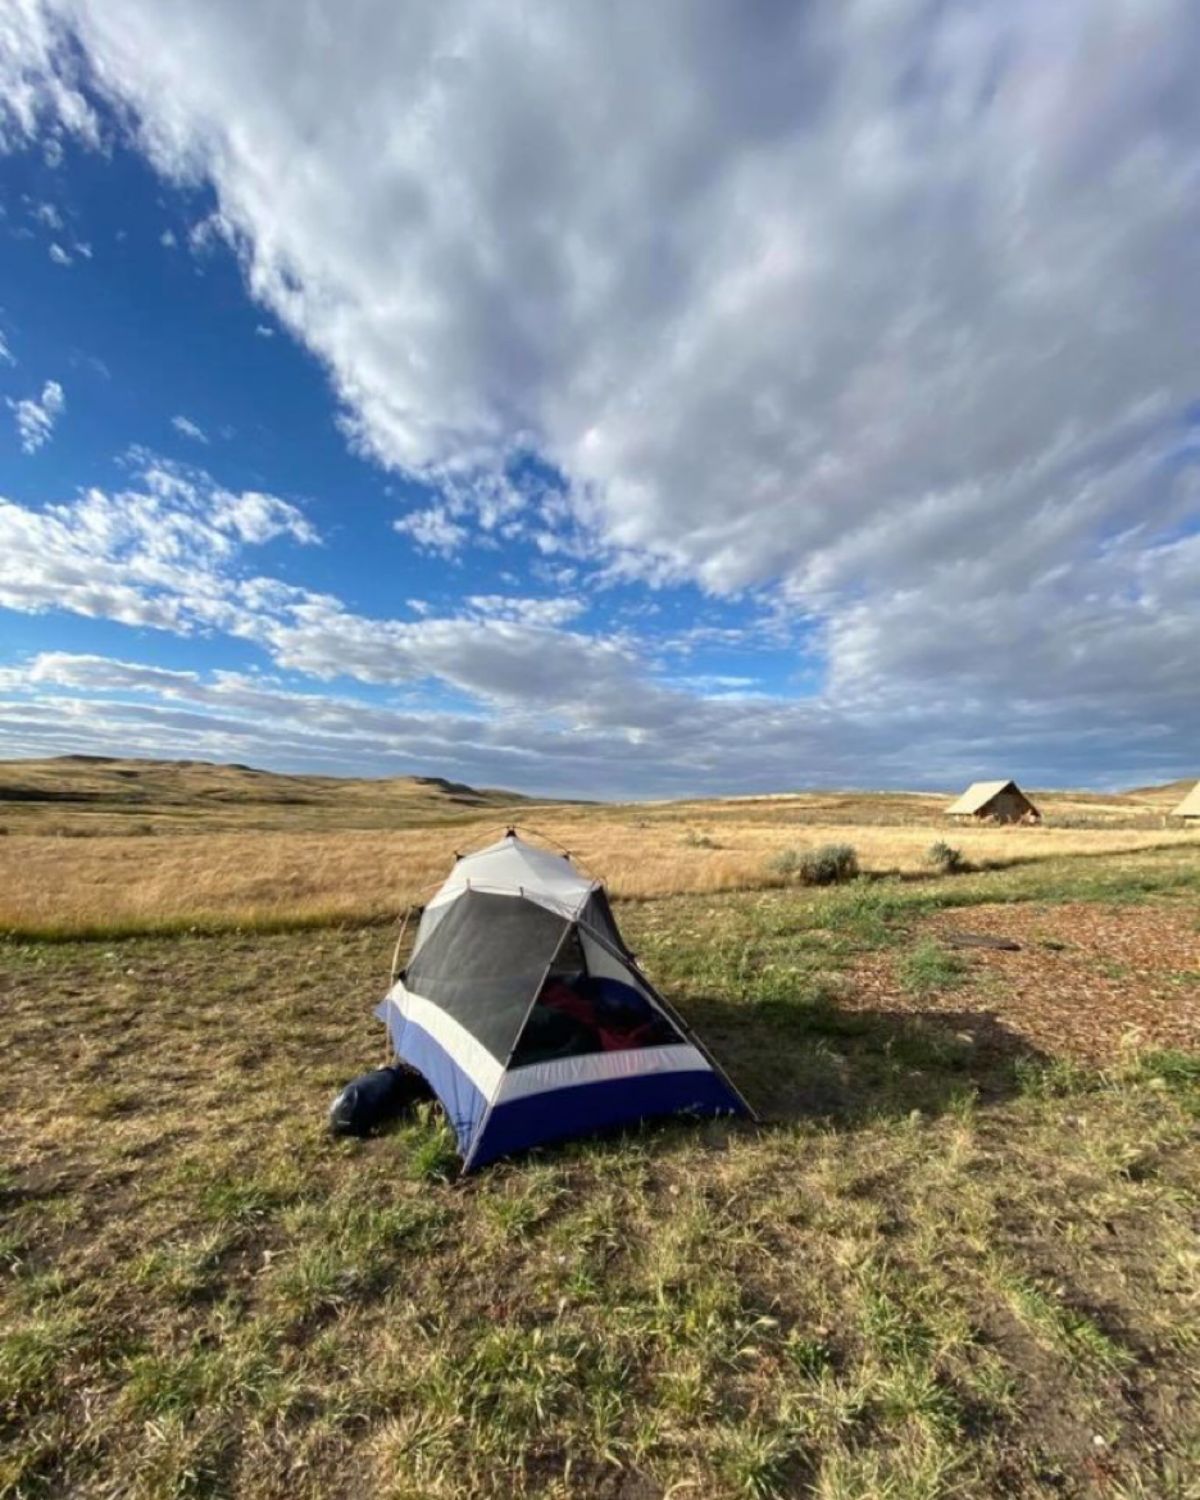 A tent in a field under an open sky.